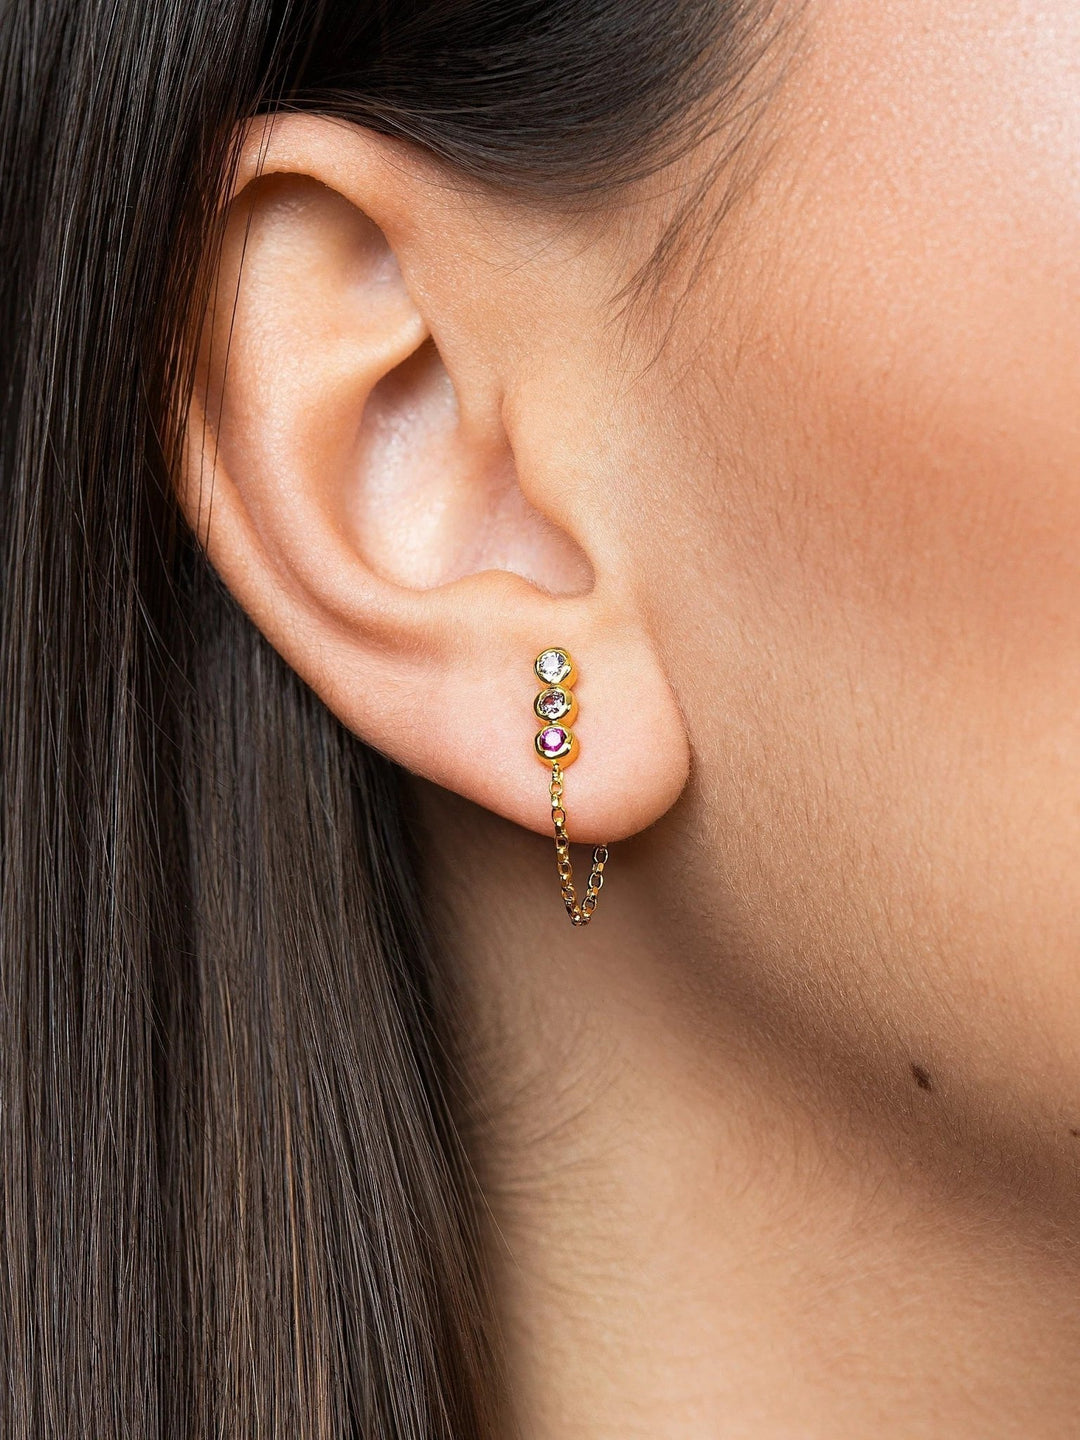 Martina Gemstone Earrings with Ruby, Emerald, Swiss Blue Topaz - MULTIAnniversary Giftbirthstone earringsLunai Jewelry